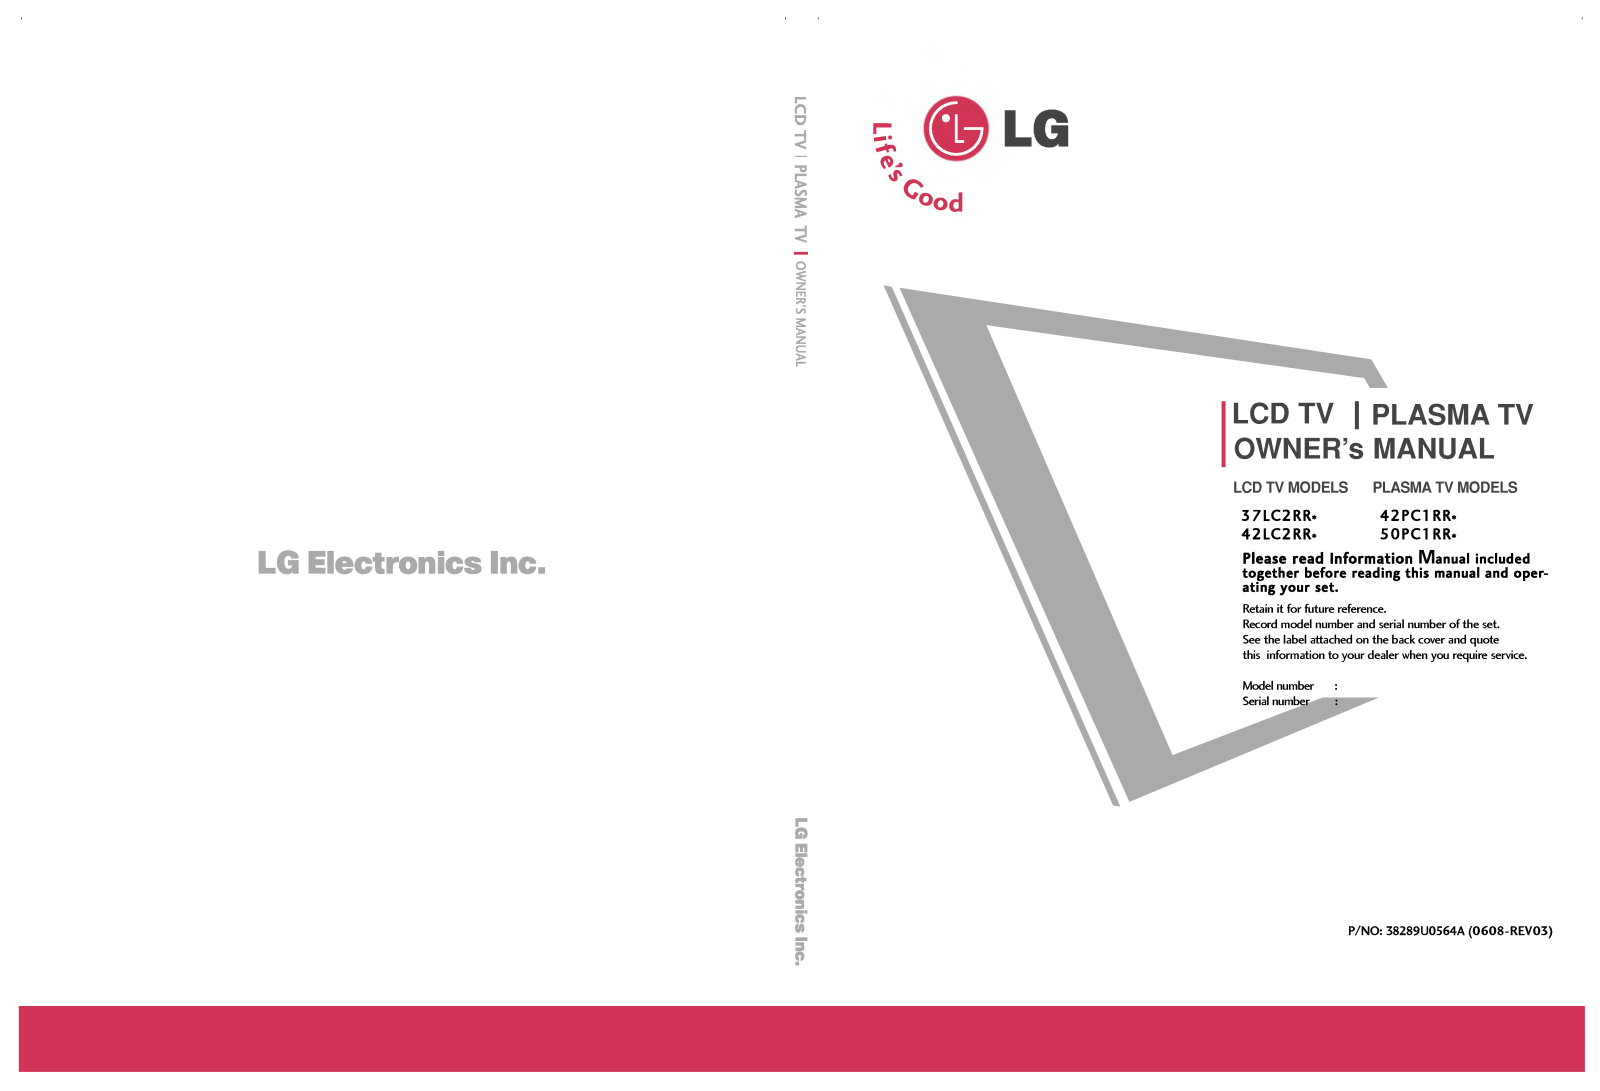 LG 50PC1RR User Manual